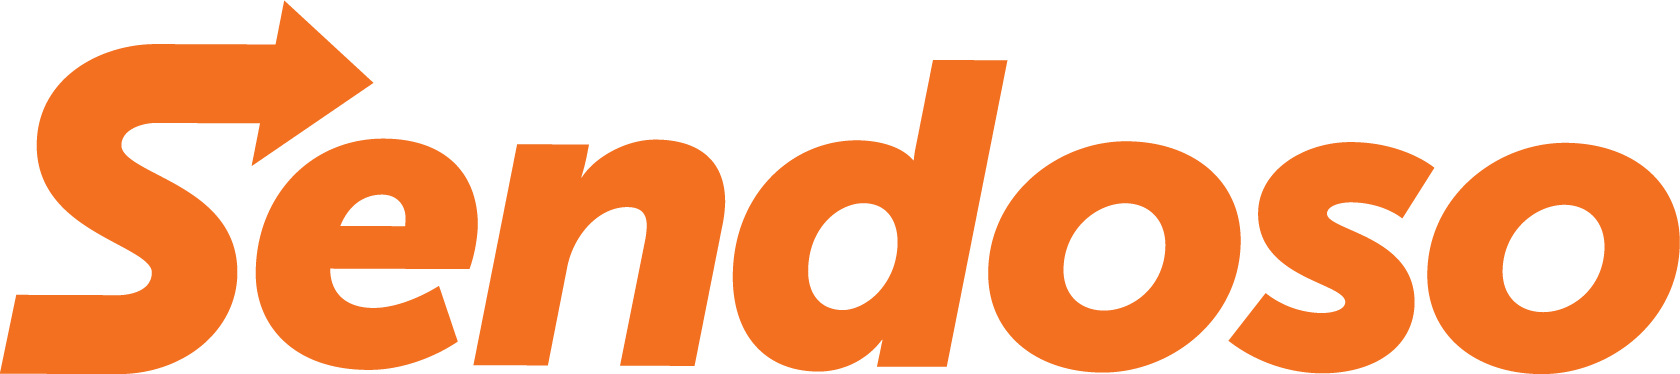 Vision Fund investment portfolio company Sendoso's logo